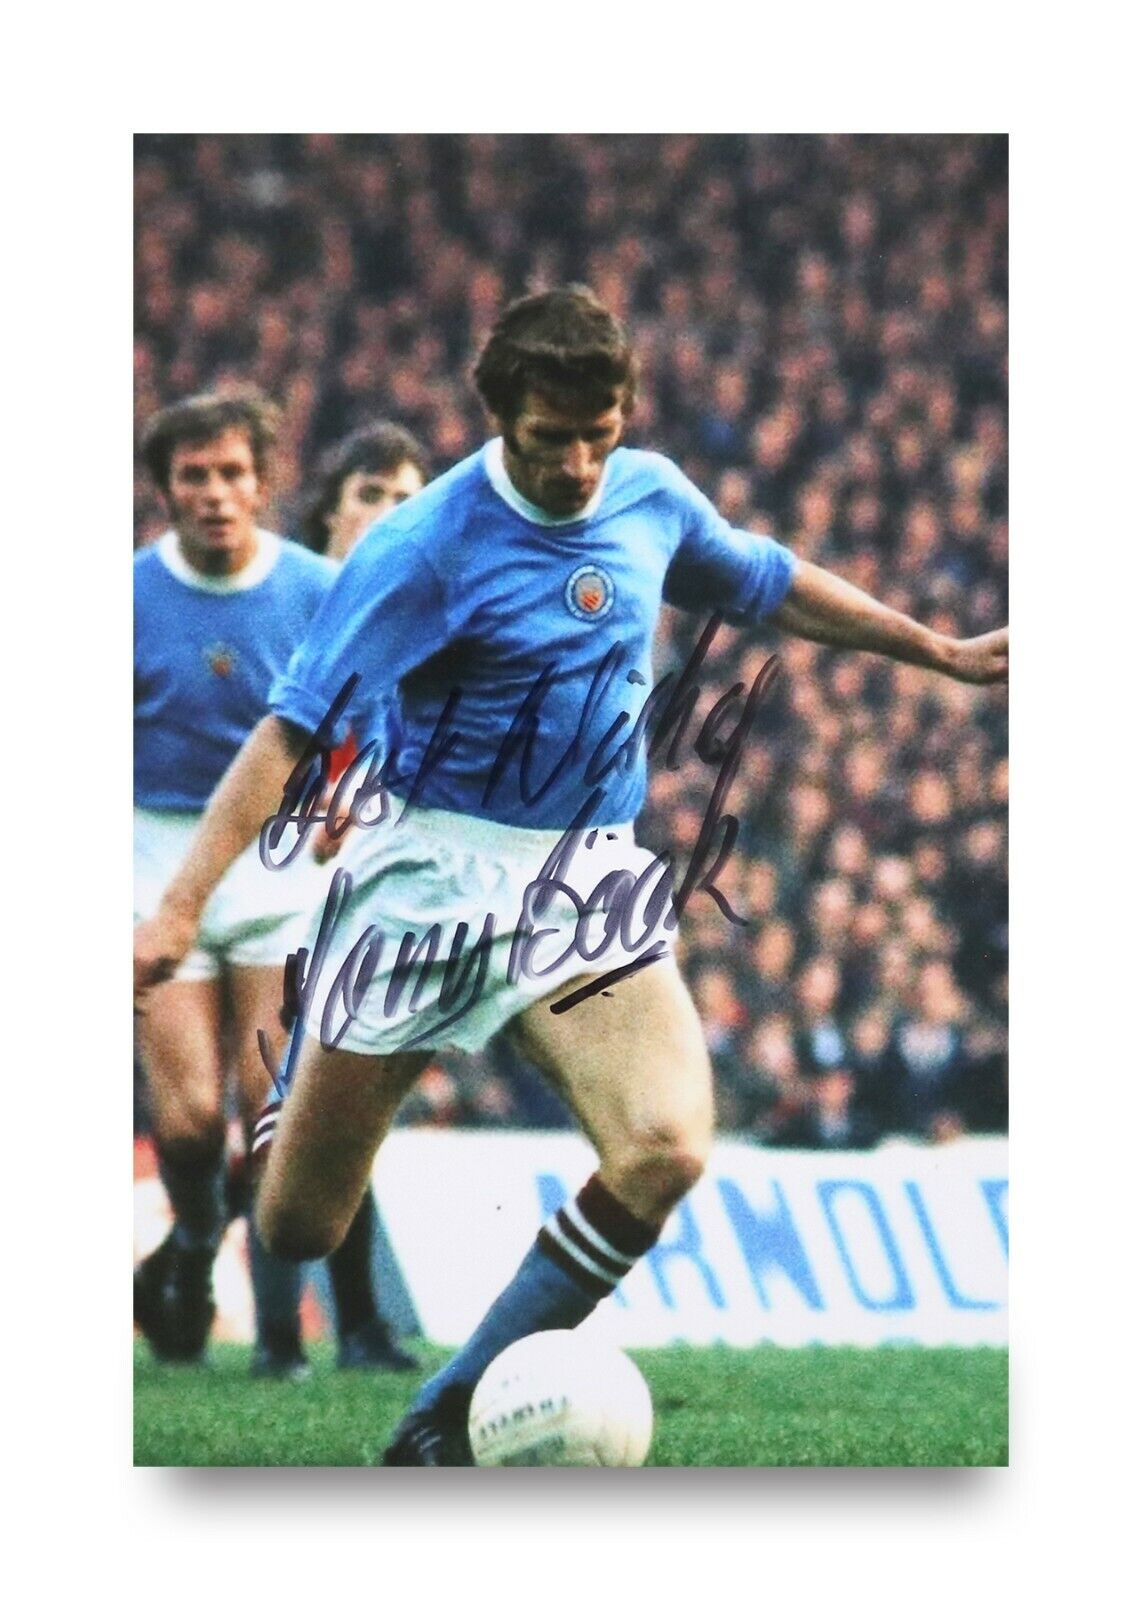 Tony Book Signed 6x4 Photo Poster painting Manchester City Genuine Autograph Memorabilia + COA